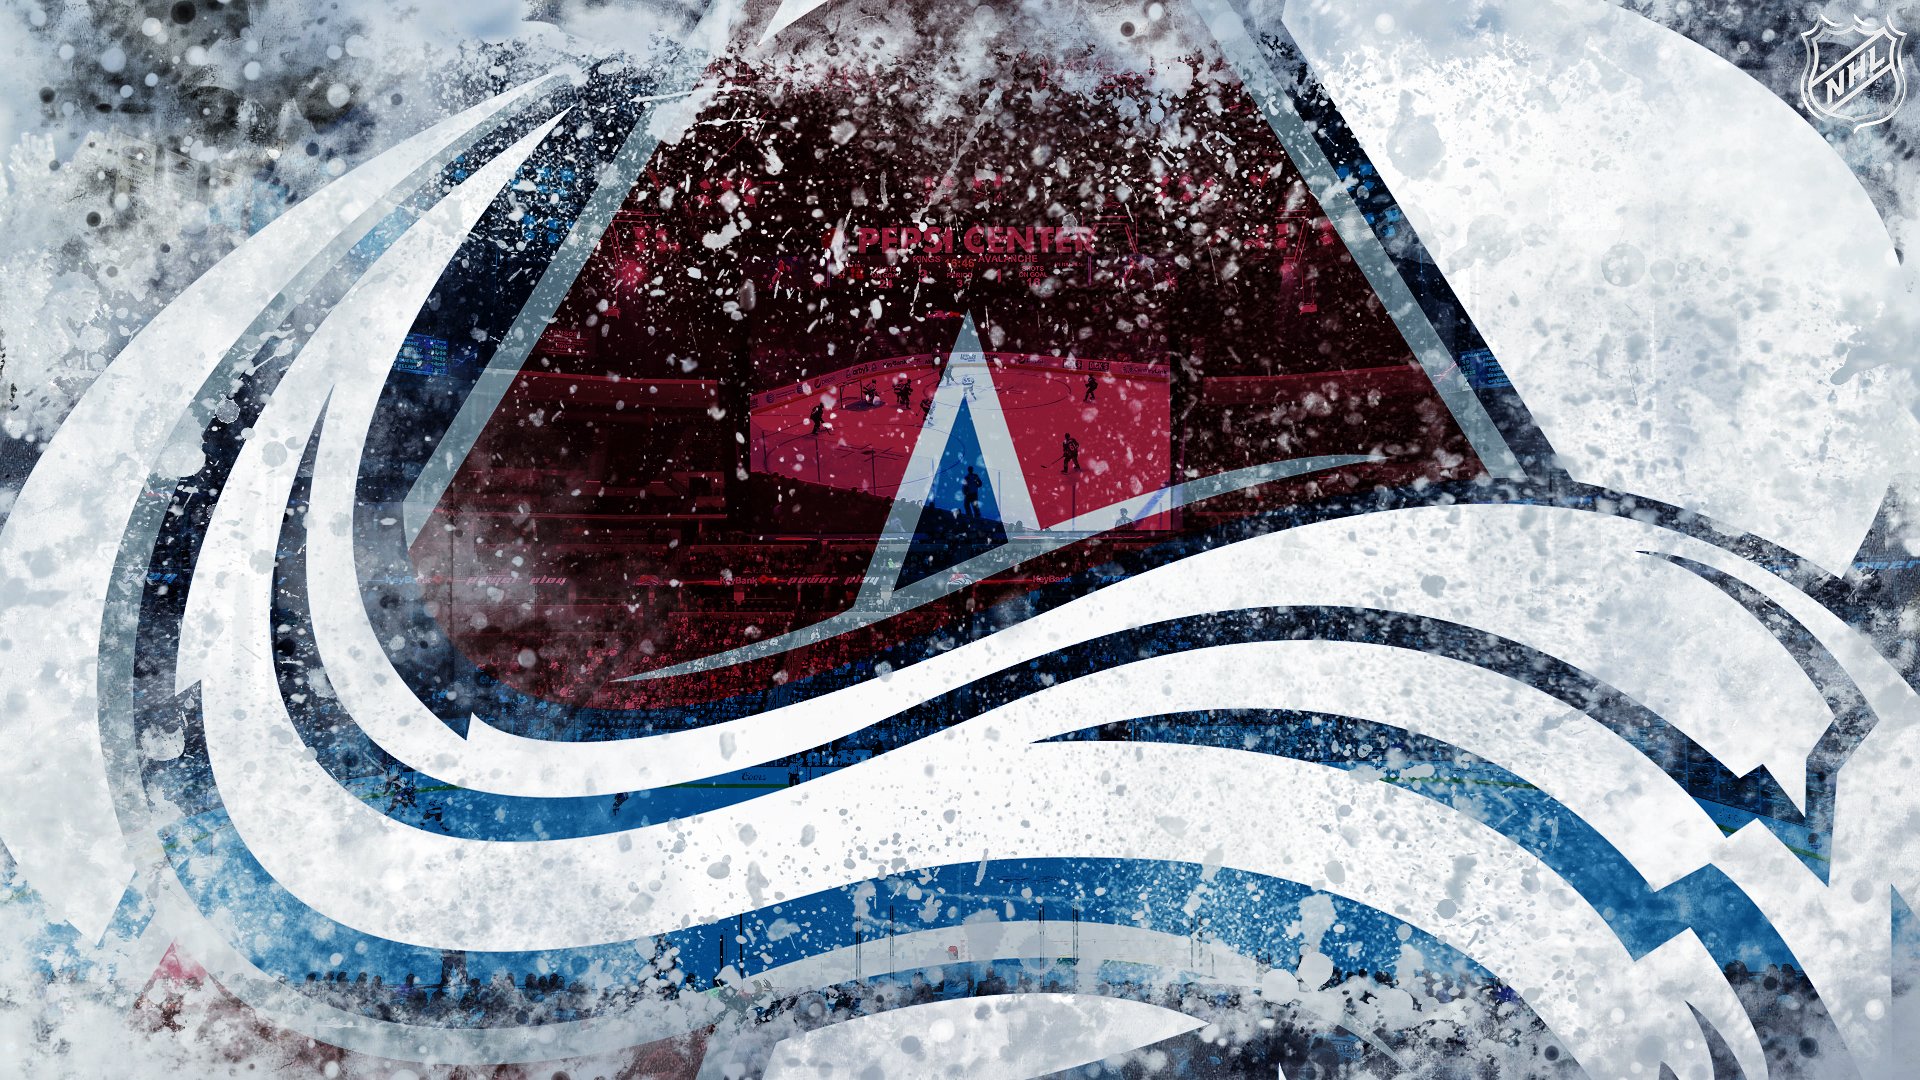 Colorado Avalanche Ice Logo Wallpaper by DenverSportsWalls on